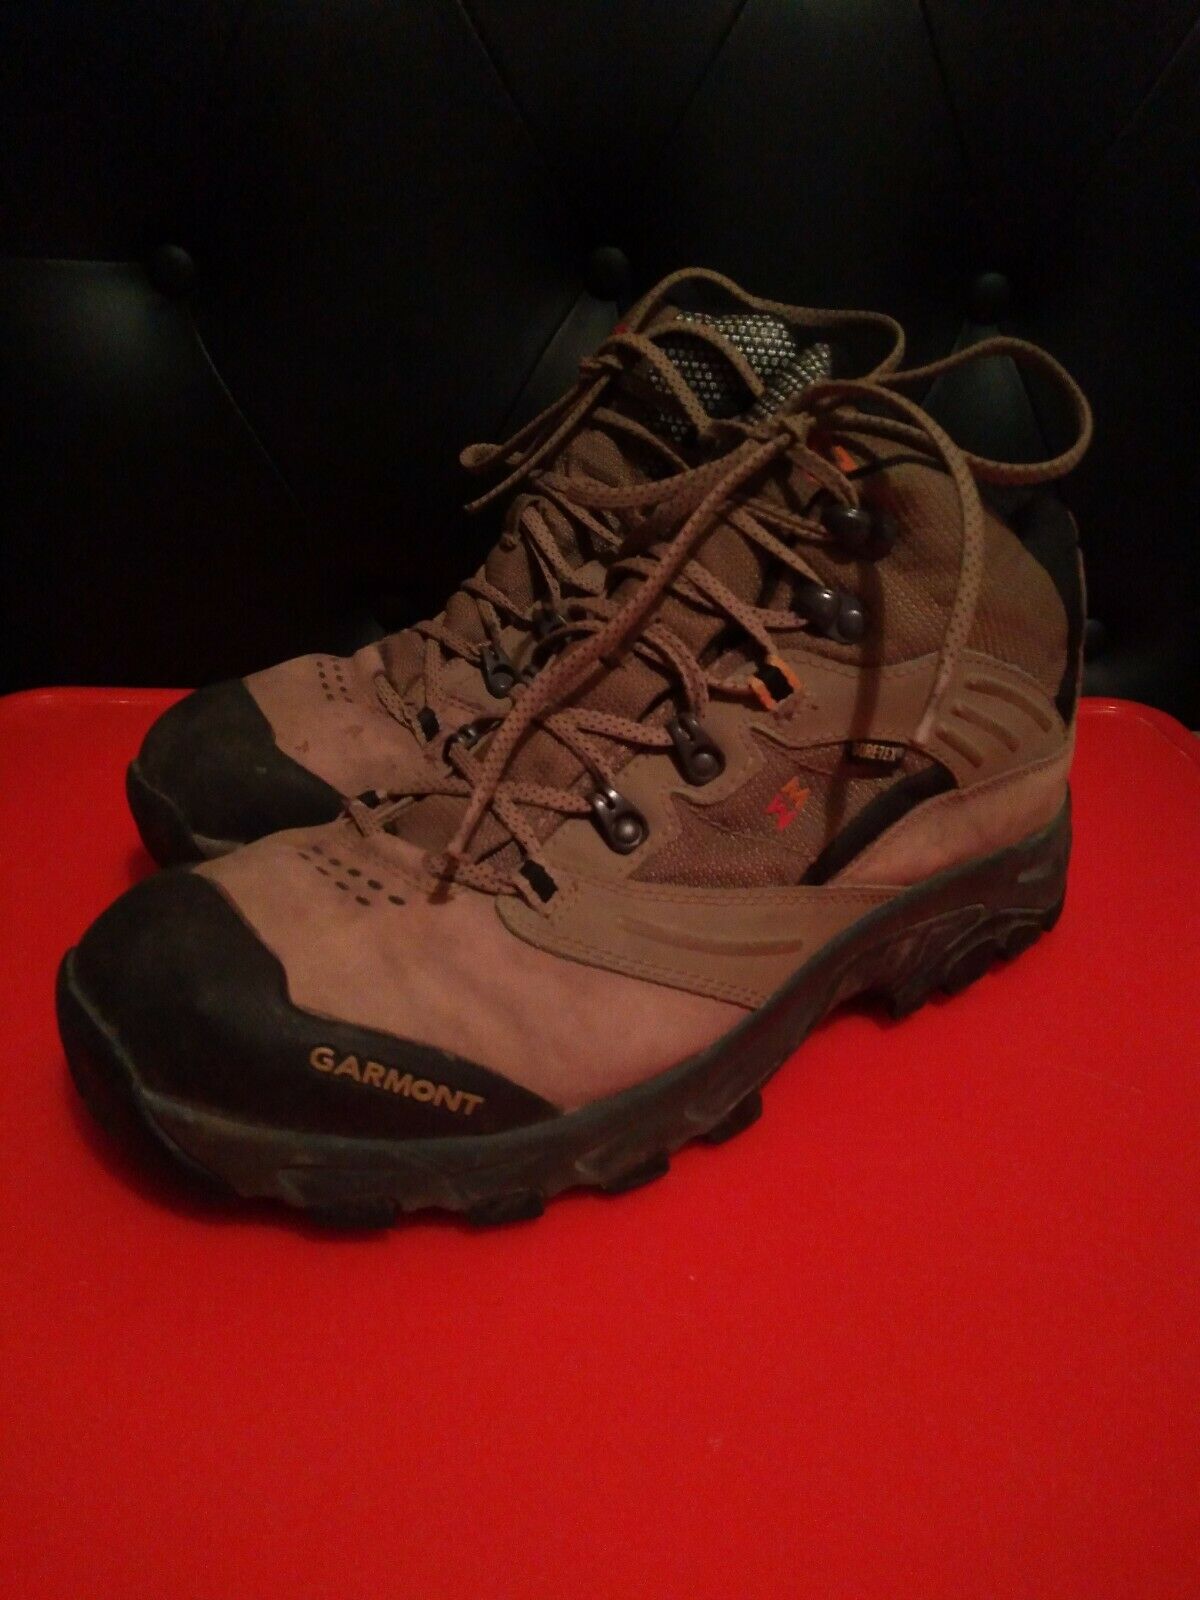 Garmont Goretex Leather Hiking Boots Men's 10.5D Medium Width Brown EUC